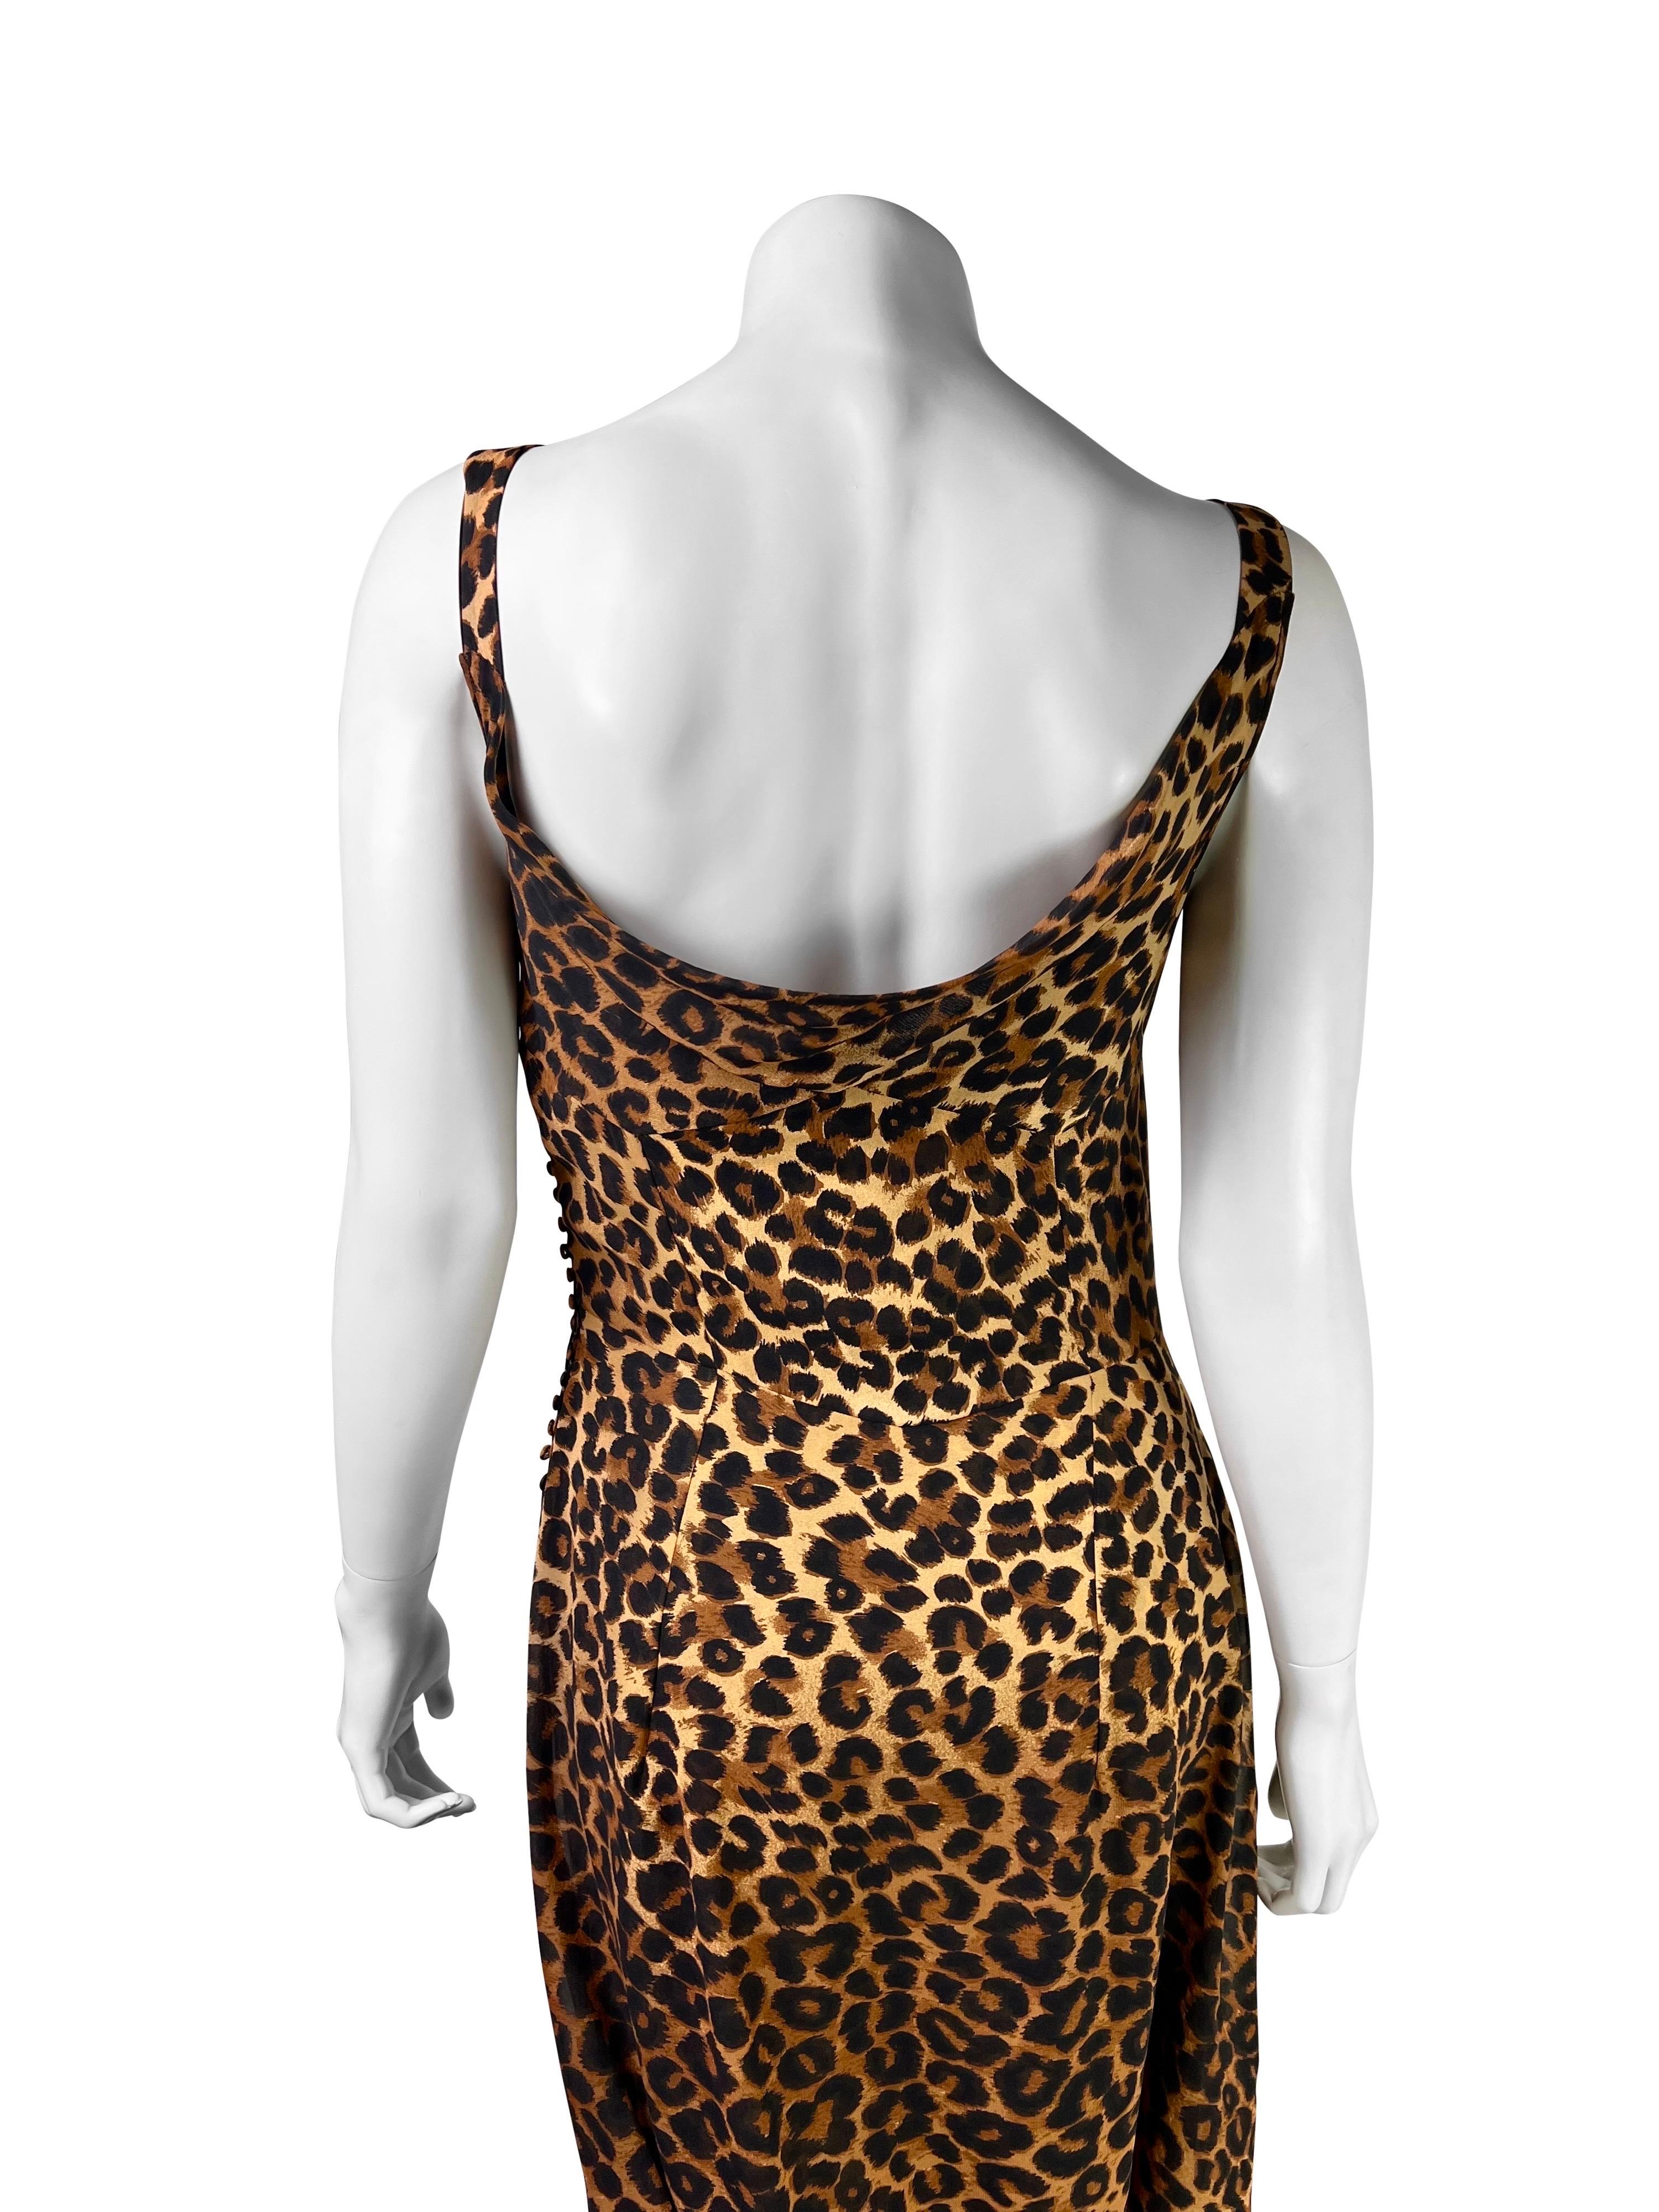 John Galliano Spring 1999 Leopard Draped Gown 1